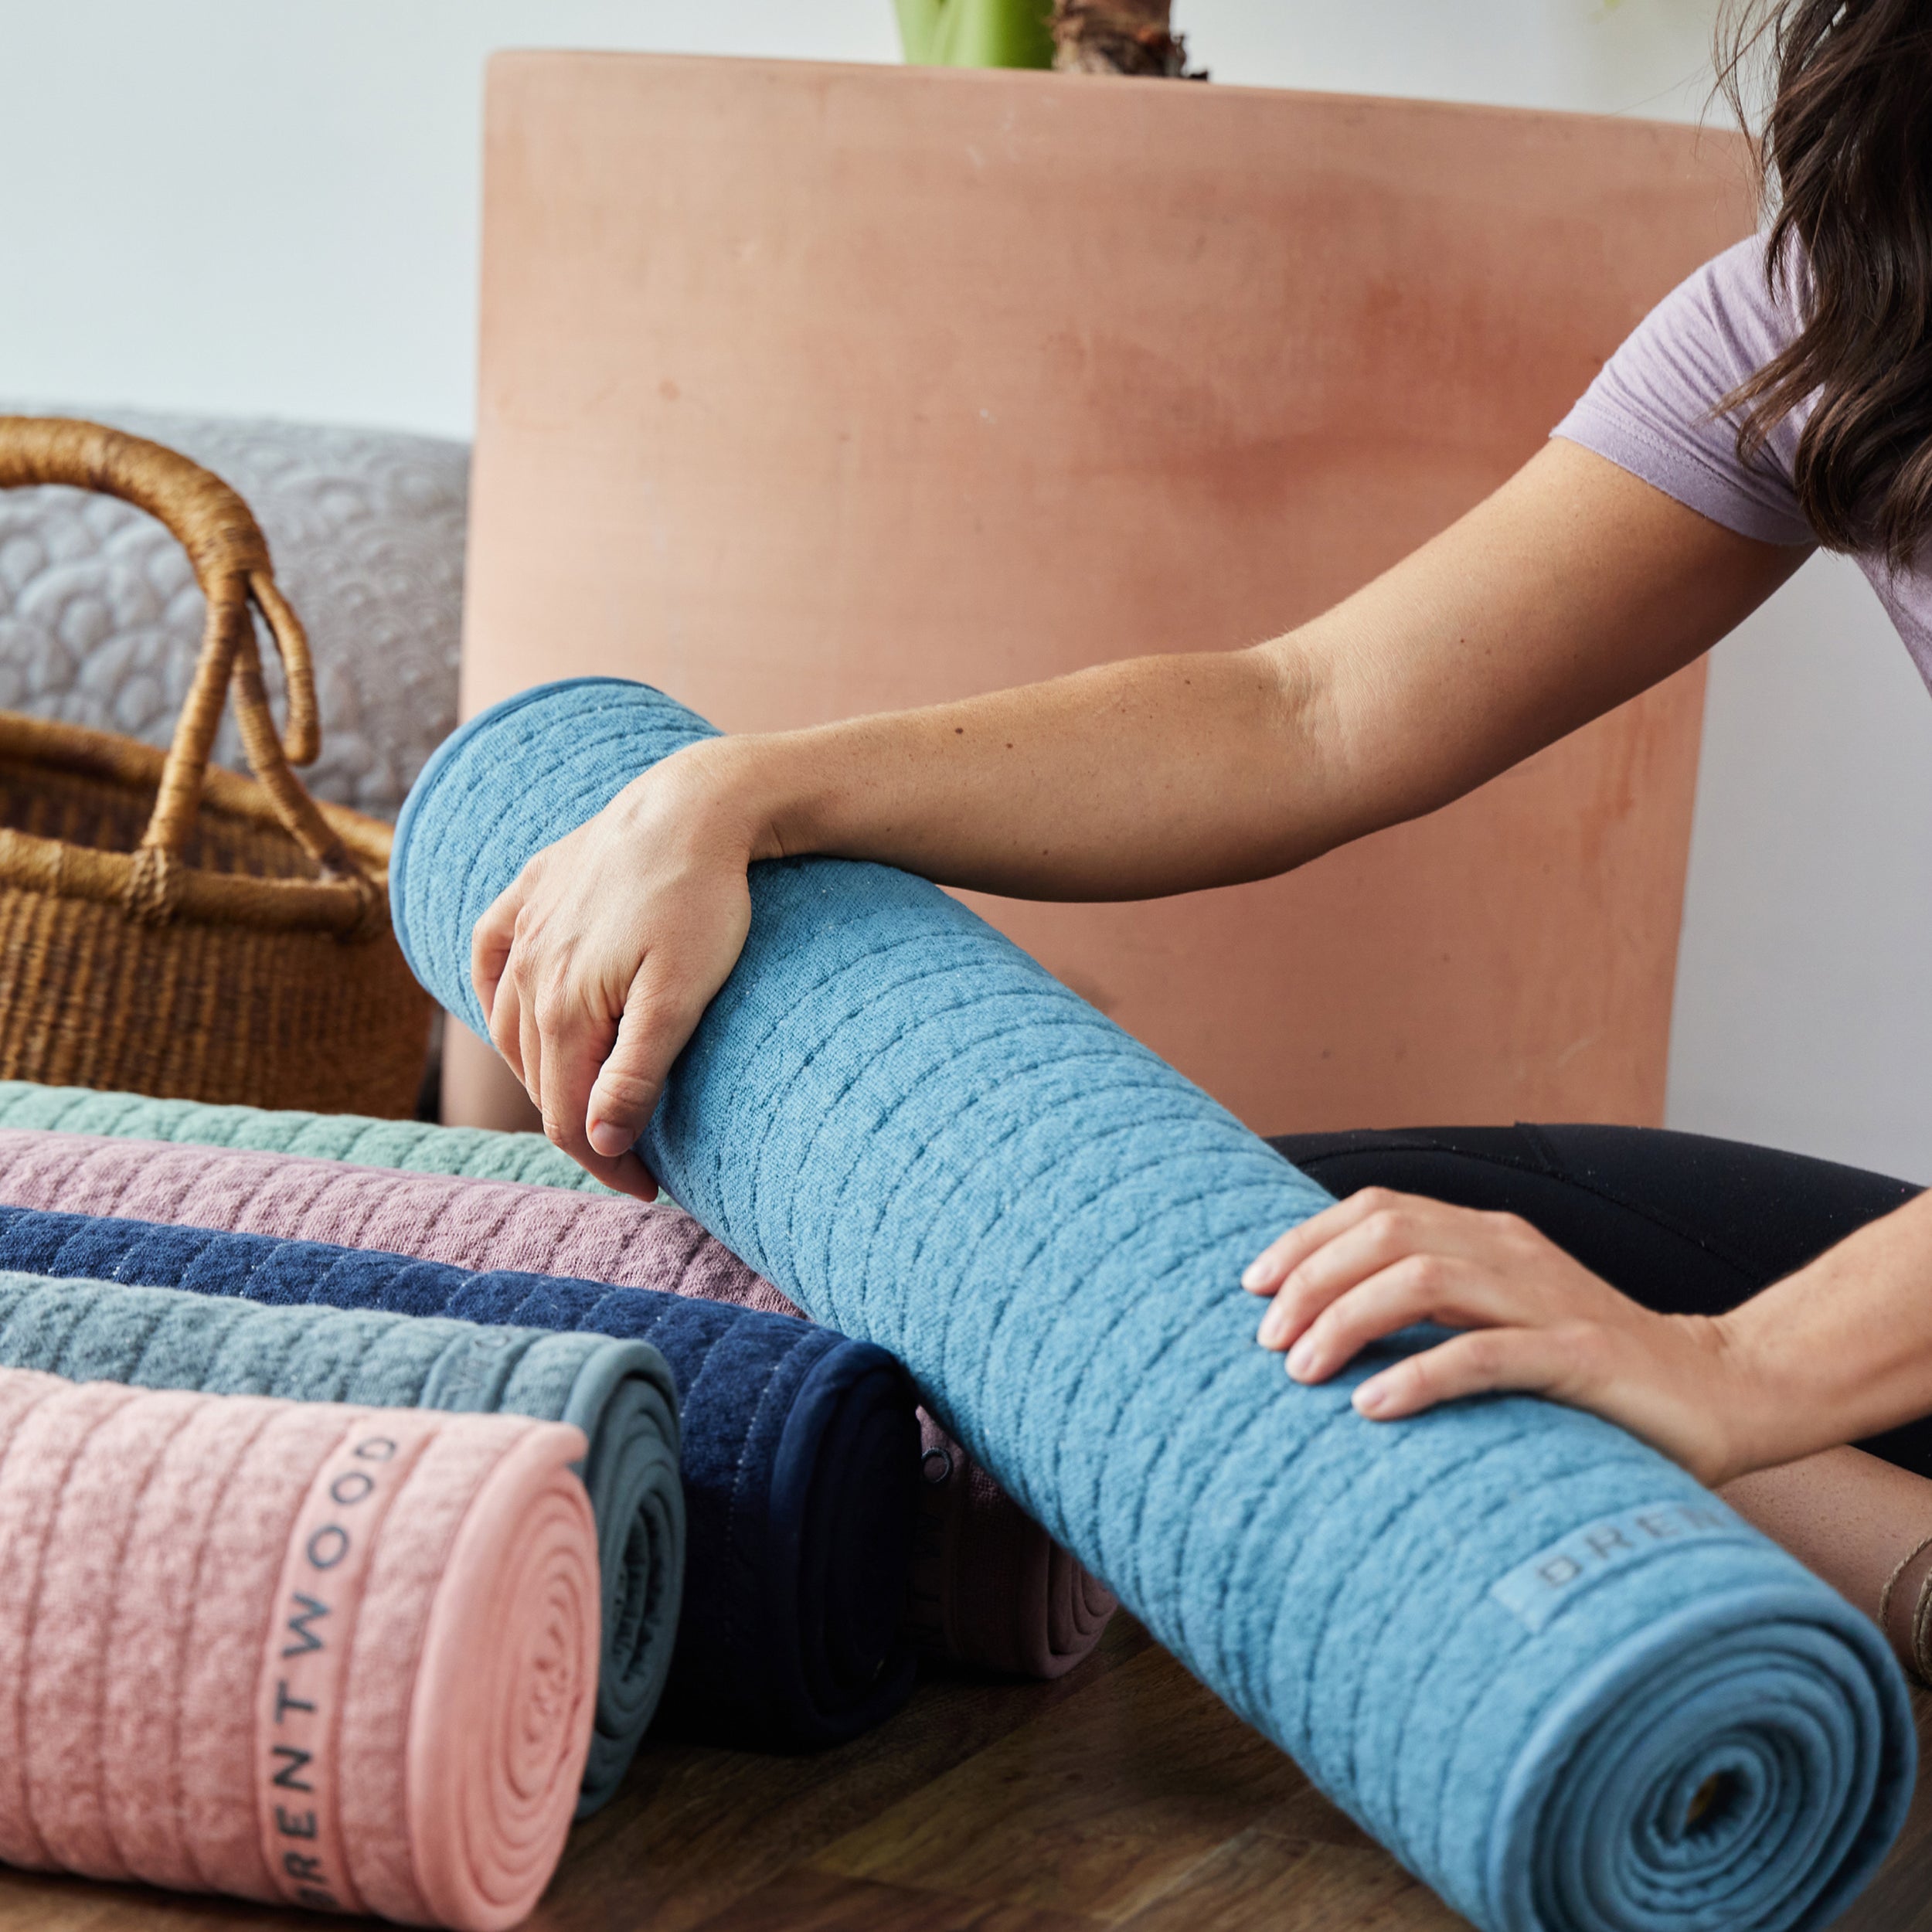 Kimjaly Yoga Towel Mat Non-Slip Machine Washable Rubber Side Grip